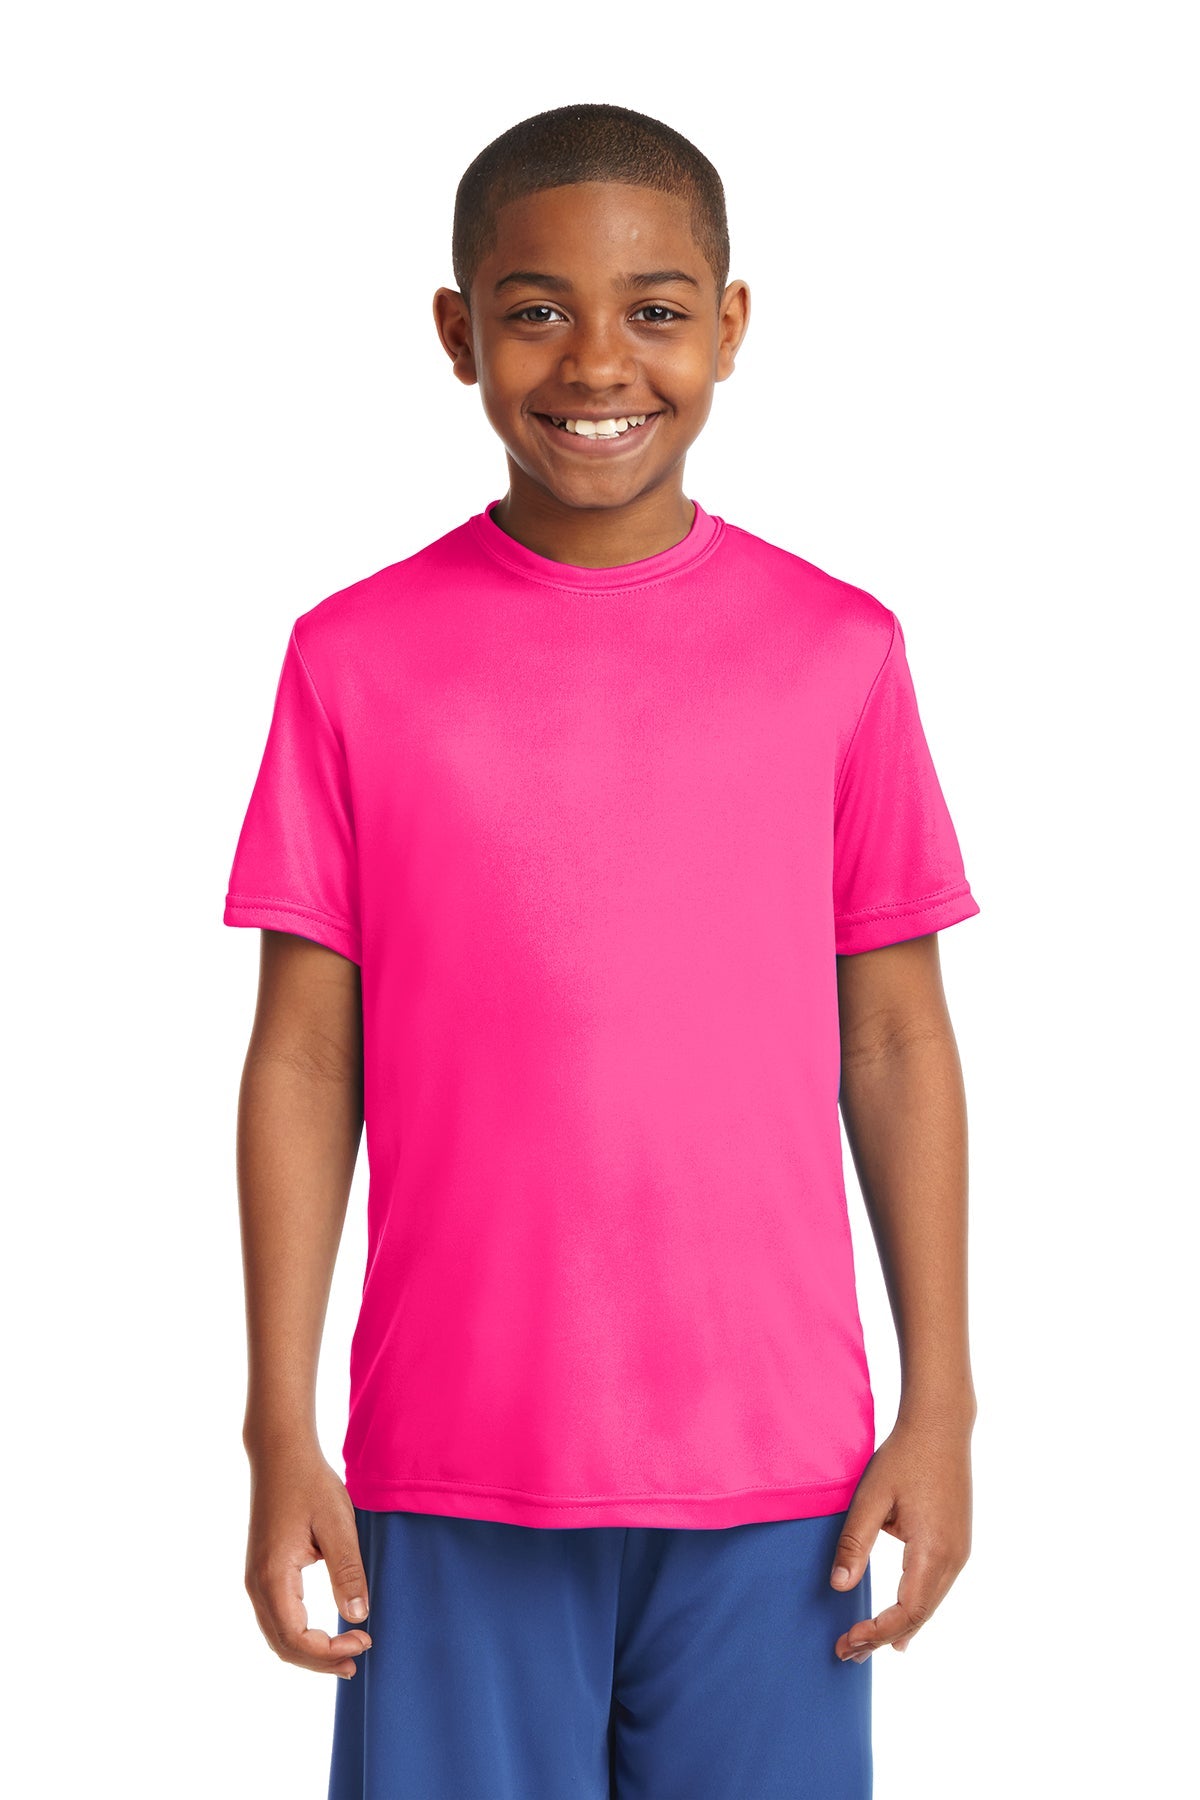 La Bestia Neon Pink Training Shirt - Youth